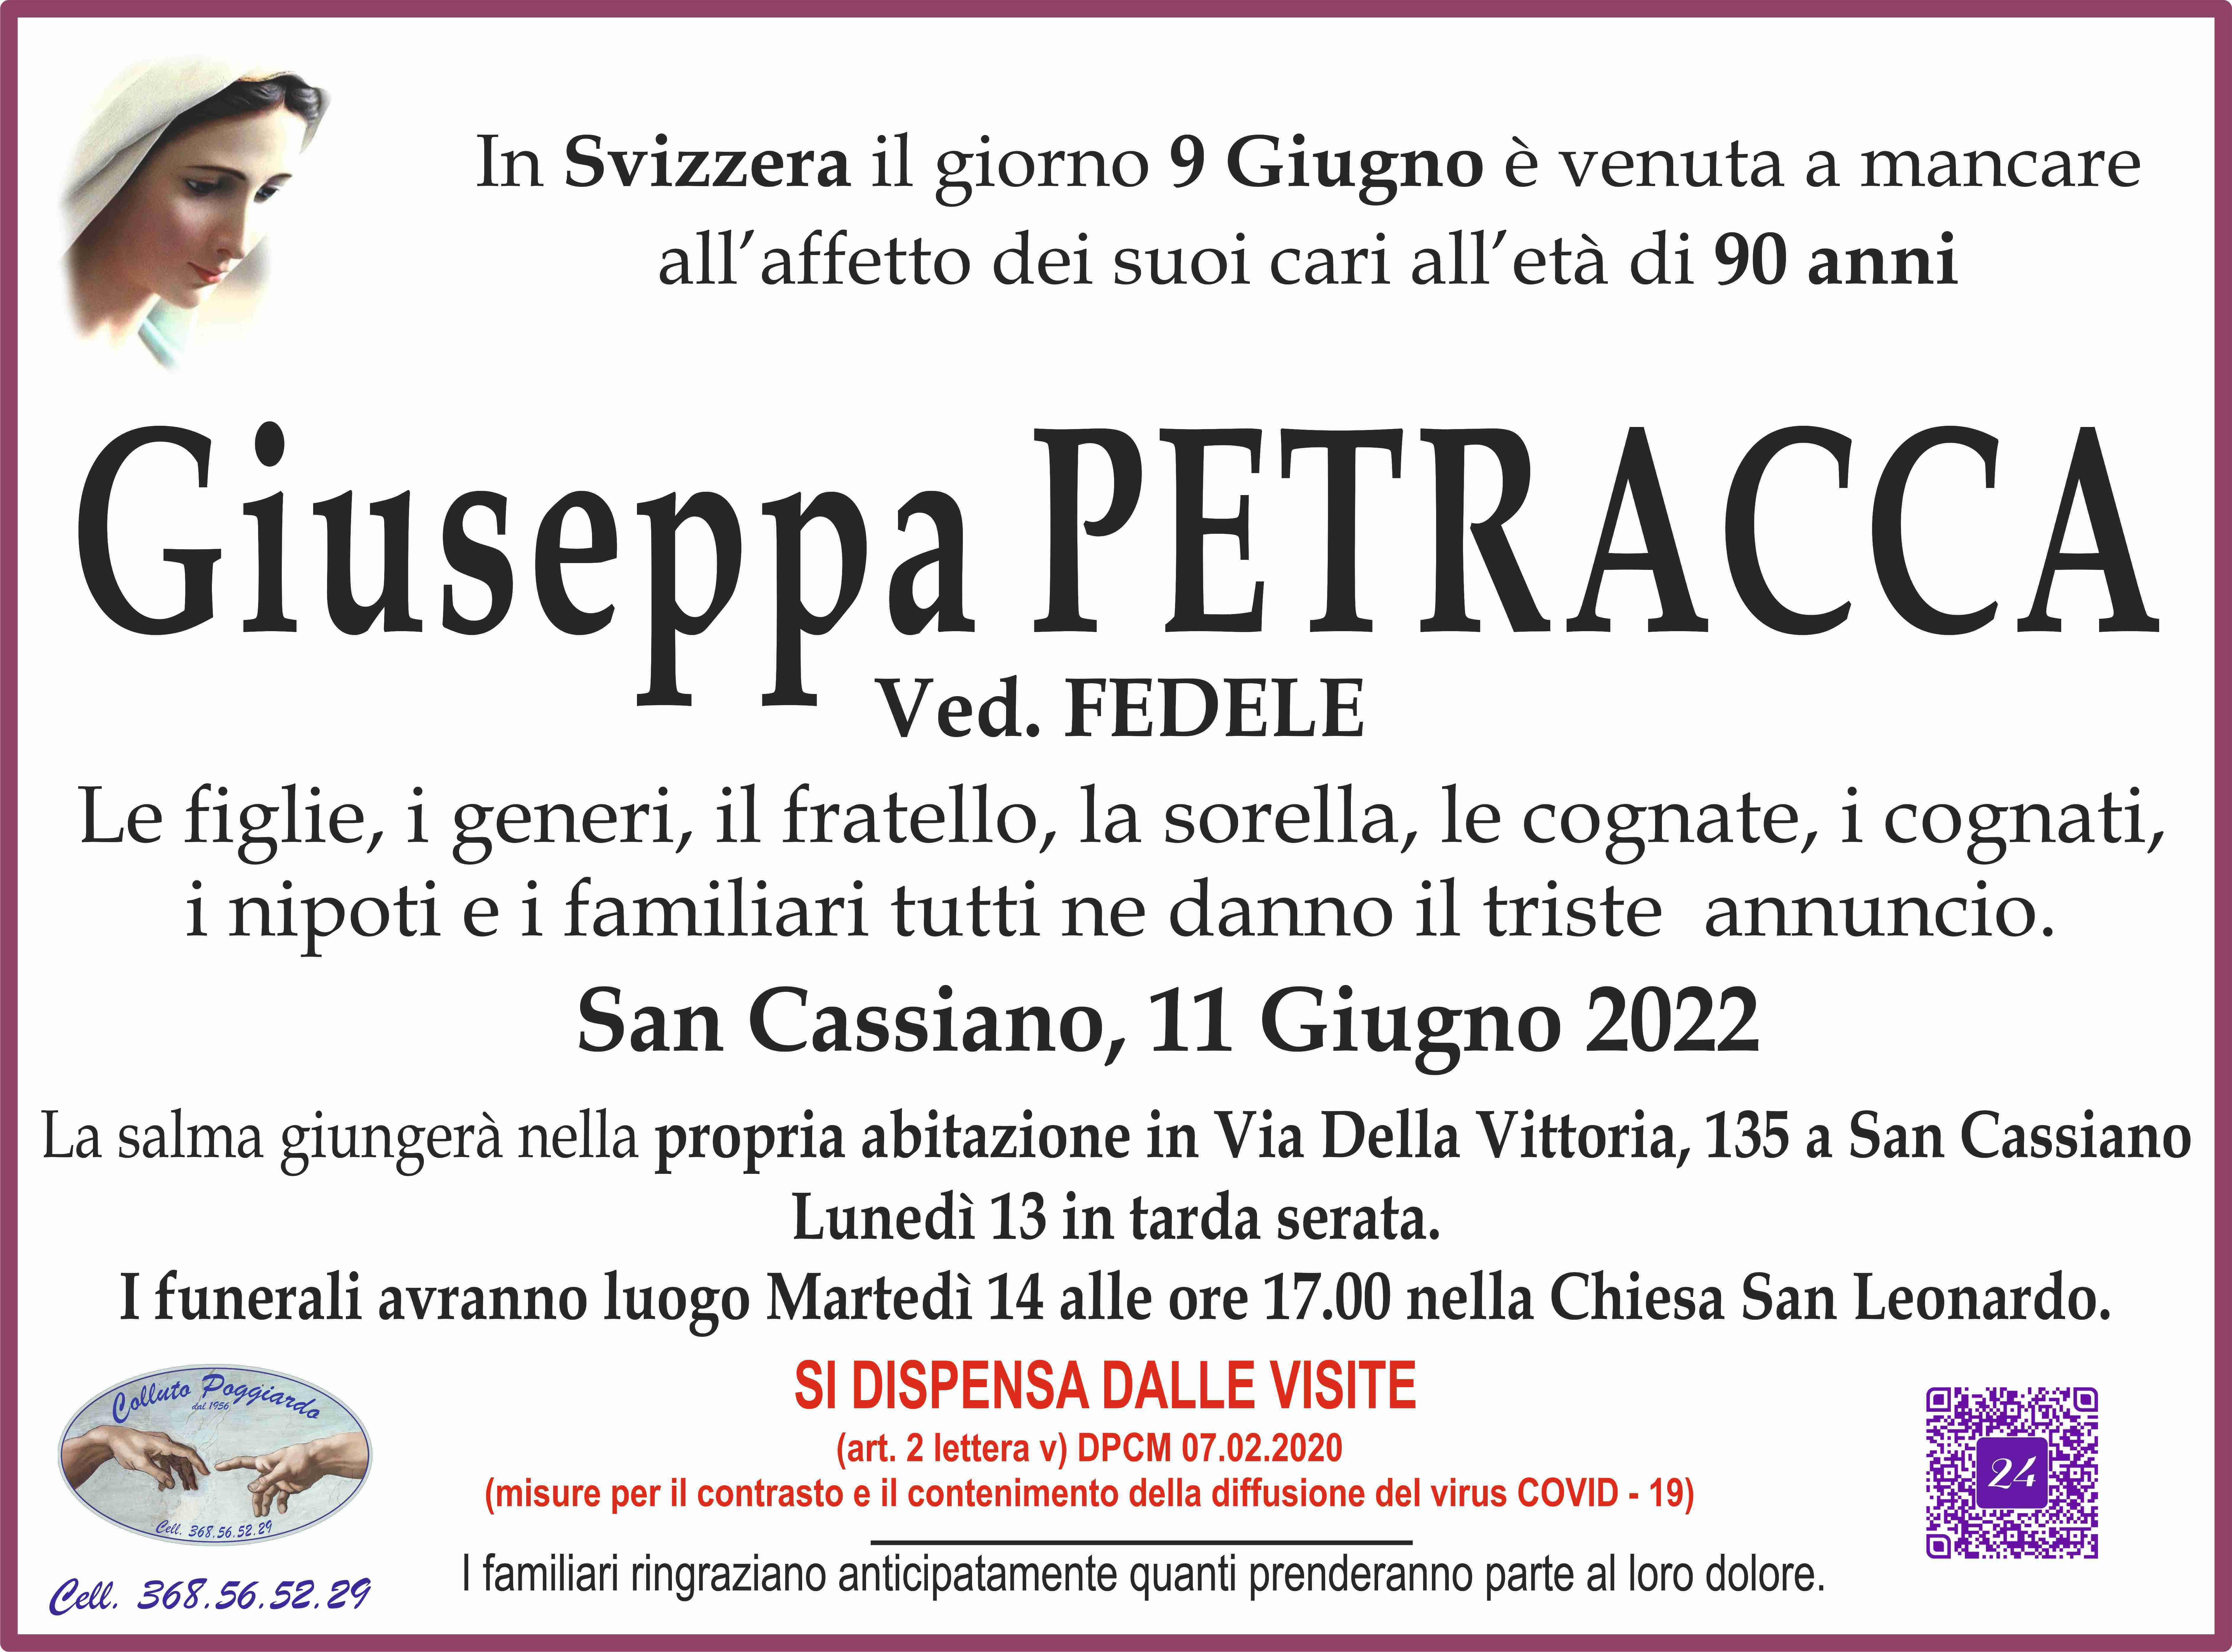 Giuseppa Petracca